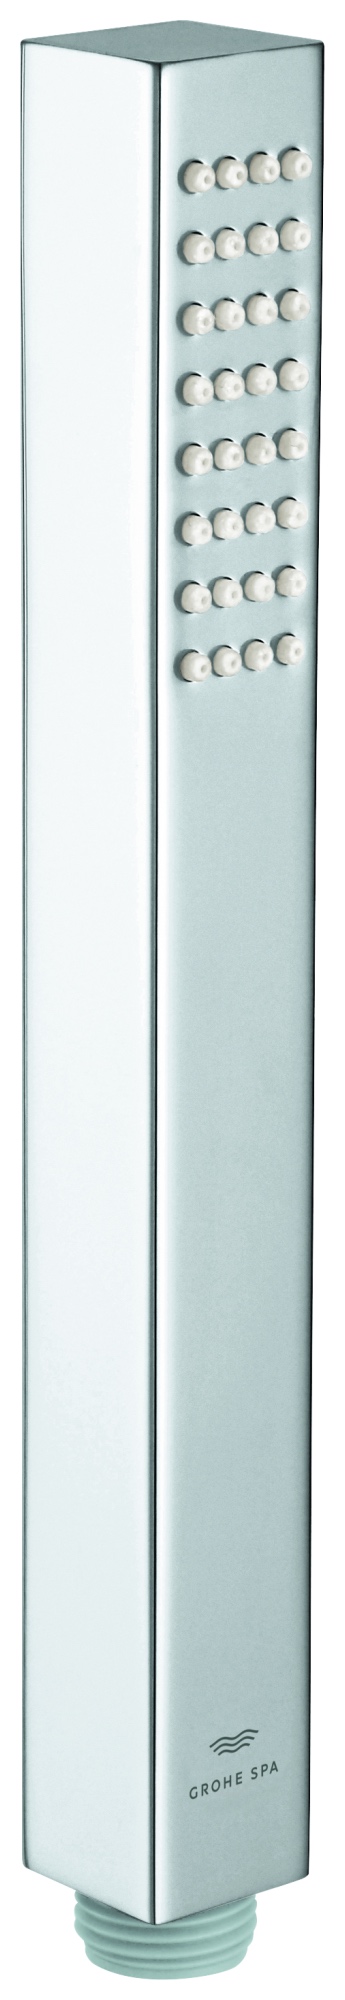 Handbrause Rainshower Aqua Cube Stick 27884_1, 1 Strahlart, Metall, chrom